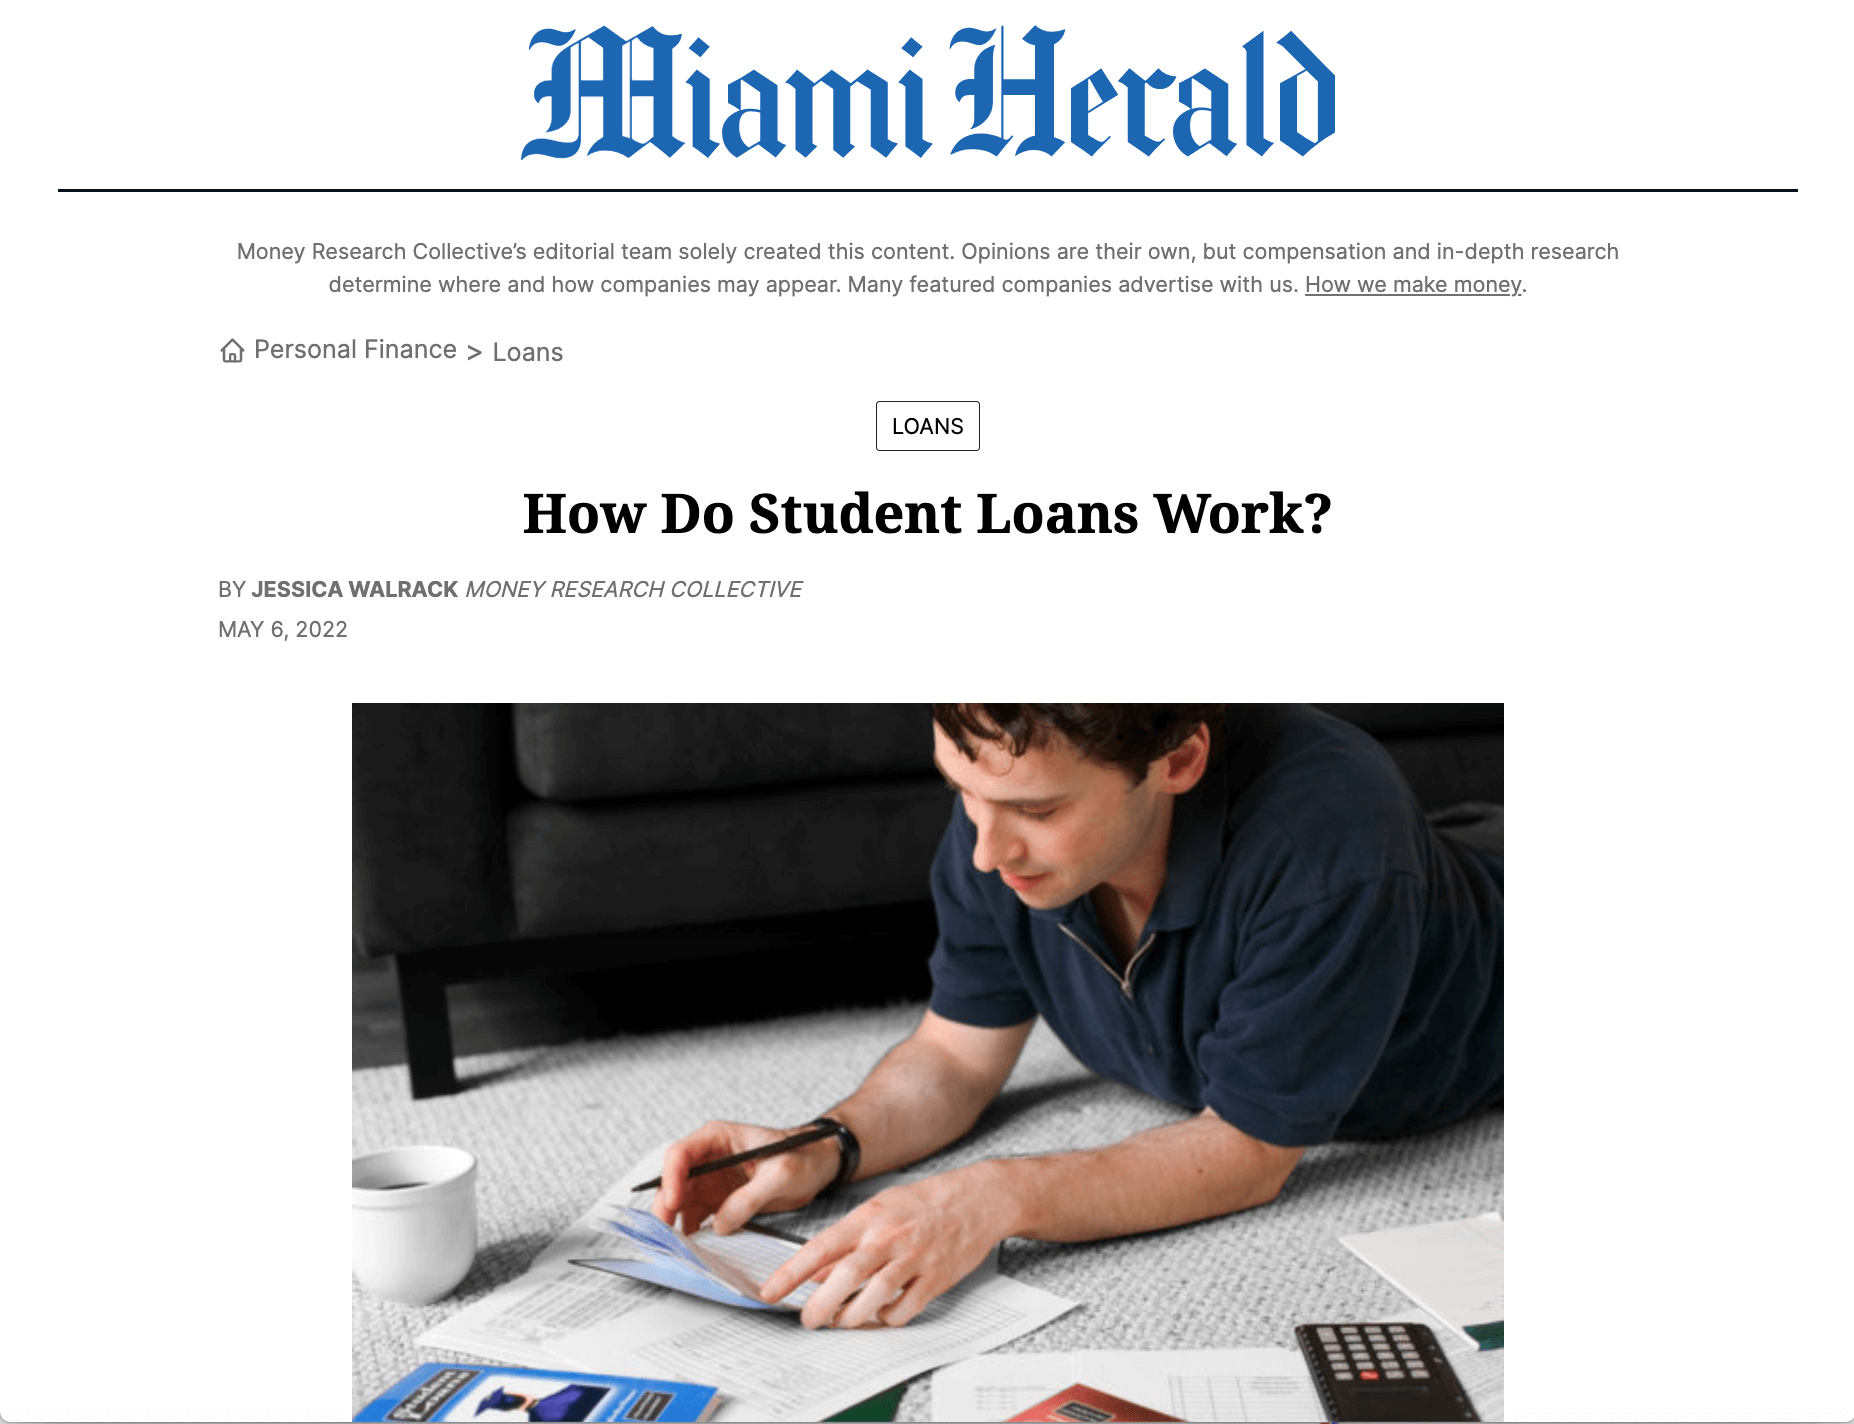 Miami Herald screenshot; Jessica Walrack writing byline "How Do Student Loans Work?"